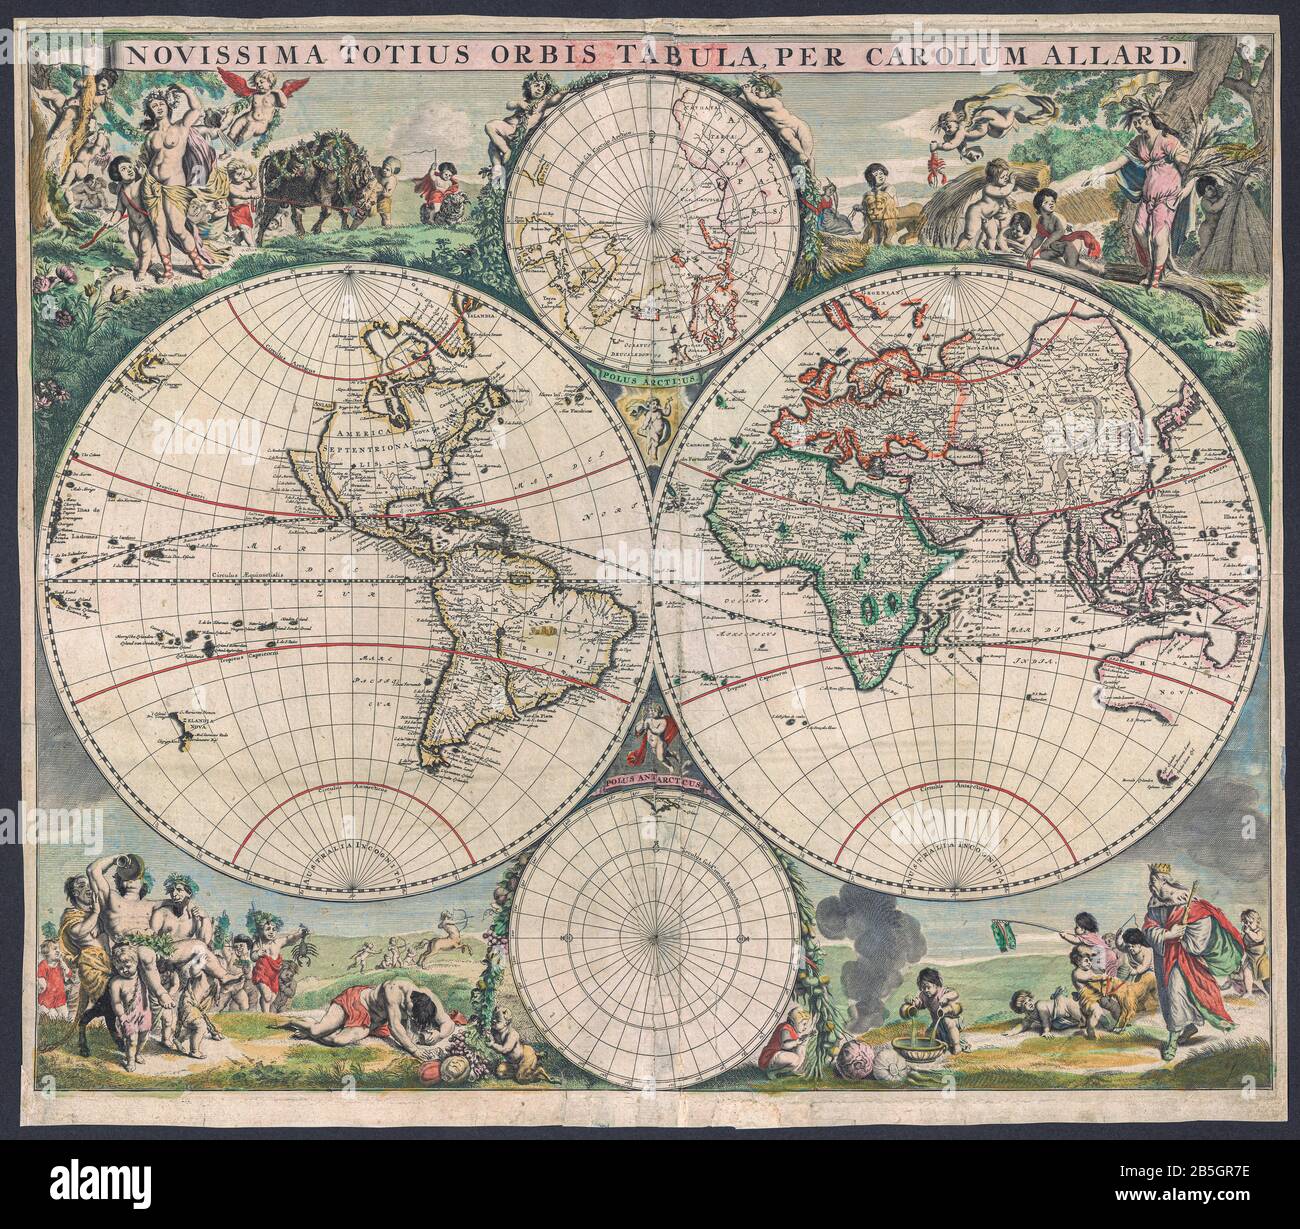 Carel Allard, (1648-ca. 1709). Novissima totius Orbis tabula "neue Karte der ganzen Welt". Amsterdam 1683. Stockfoto